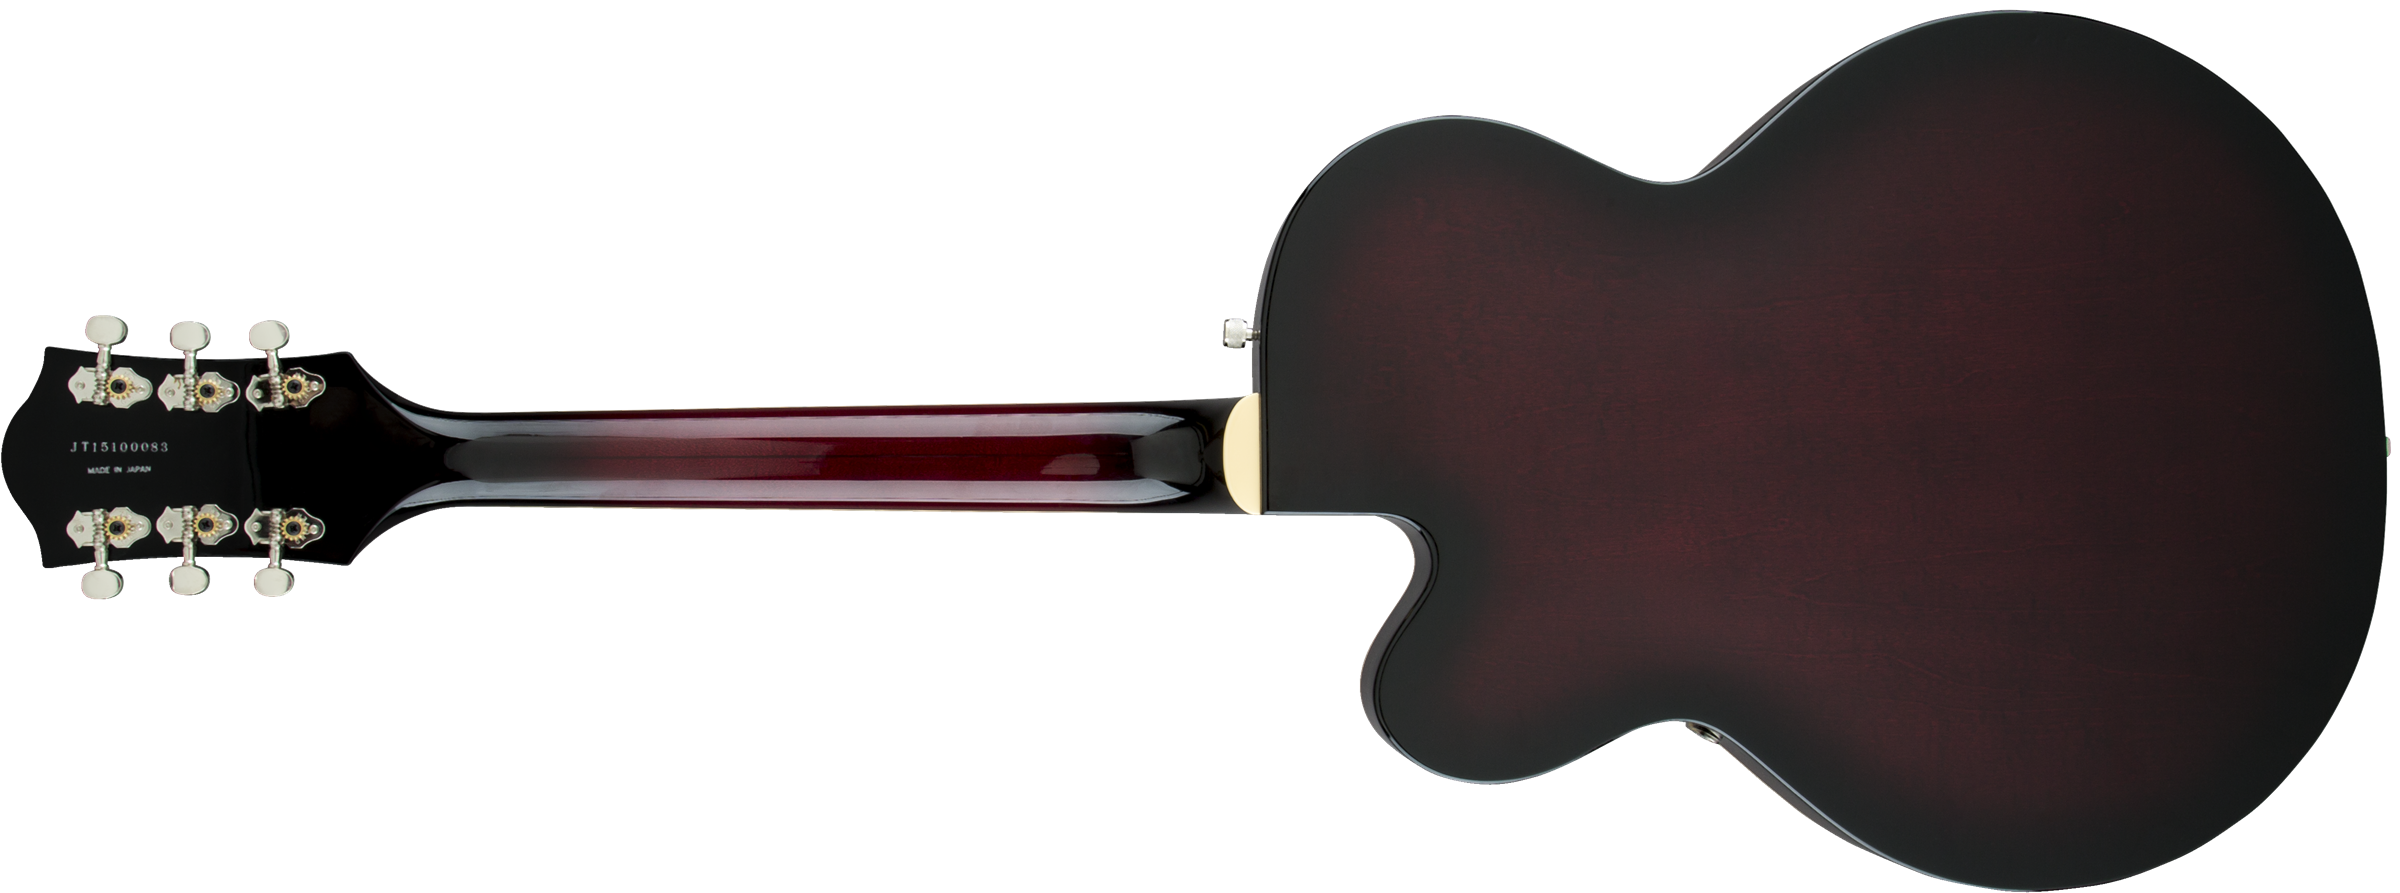 Gretsch G6119t-62vs Chet Atkins Tennessee Rose 2h Trem Rw - Dark Cherry Stain - Semi hollow elektriche gitaar - Variation 1